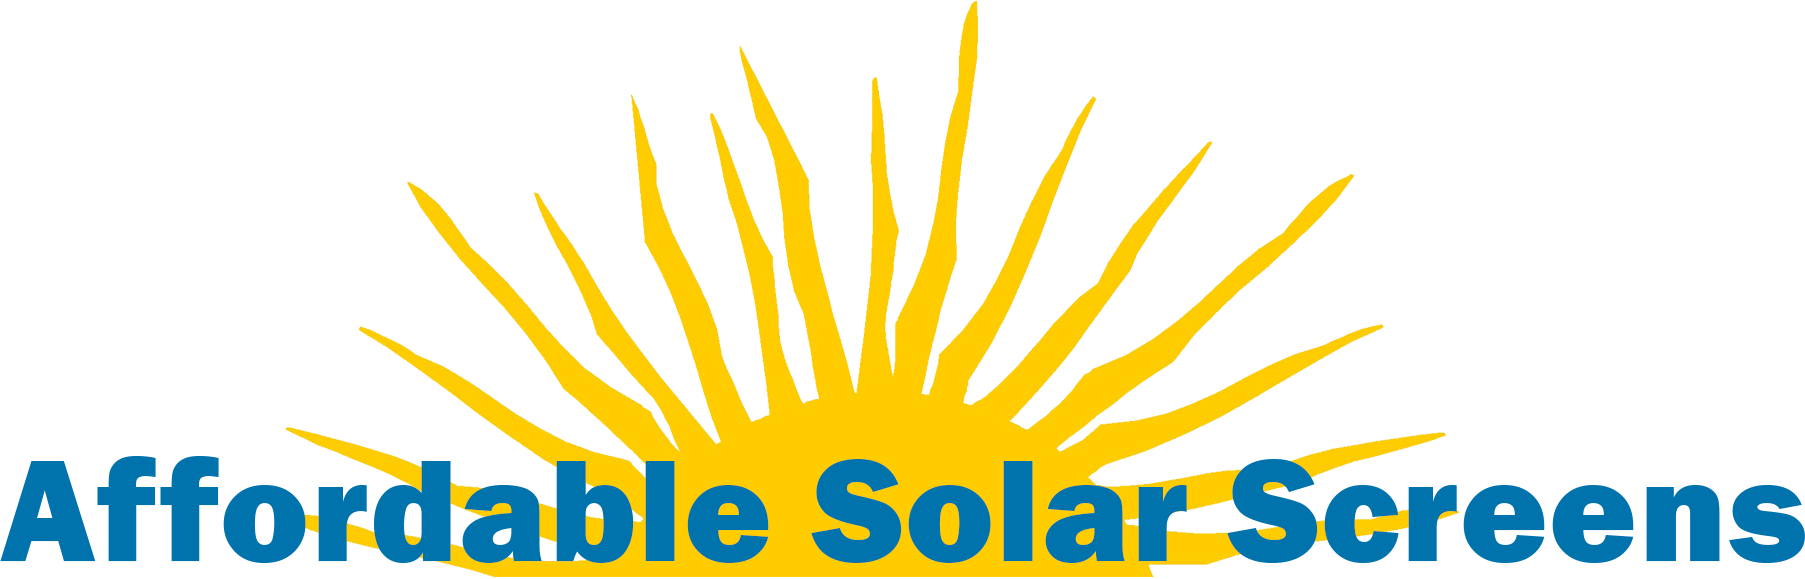 Affordable Solar Screens